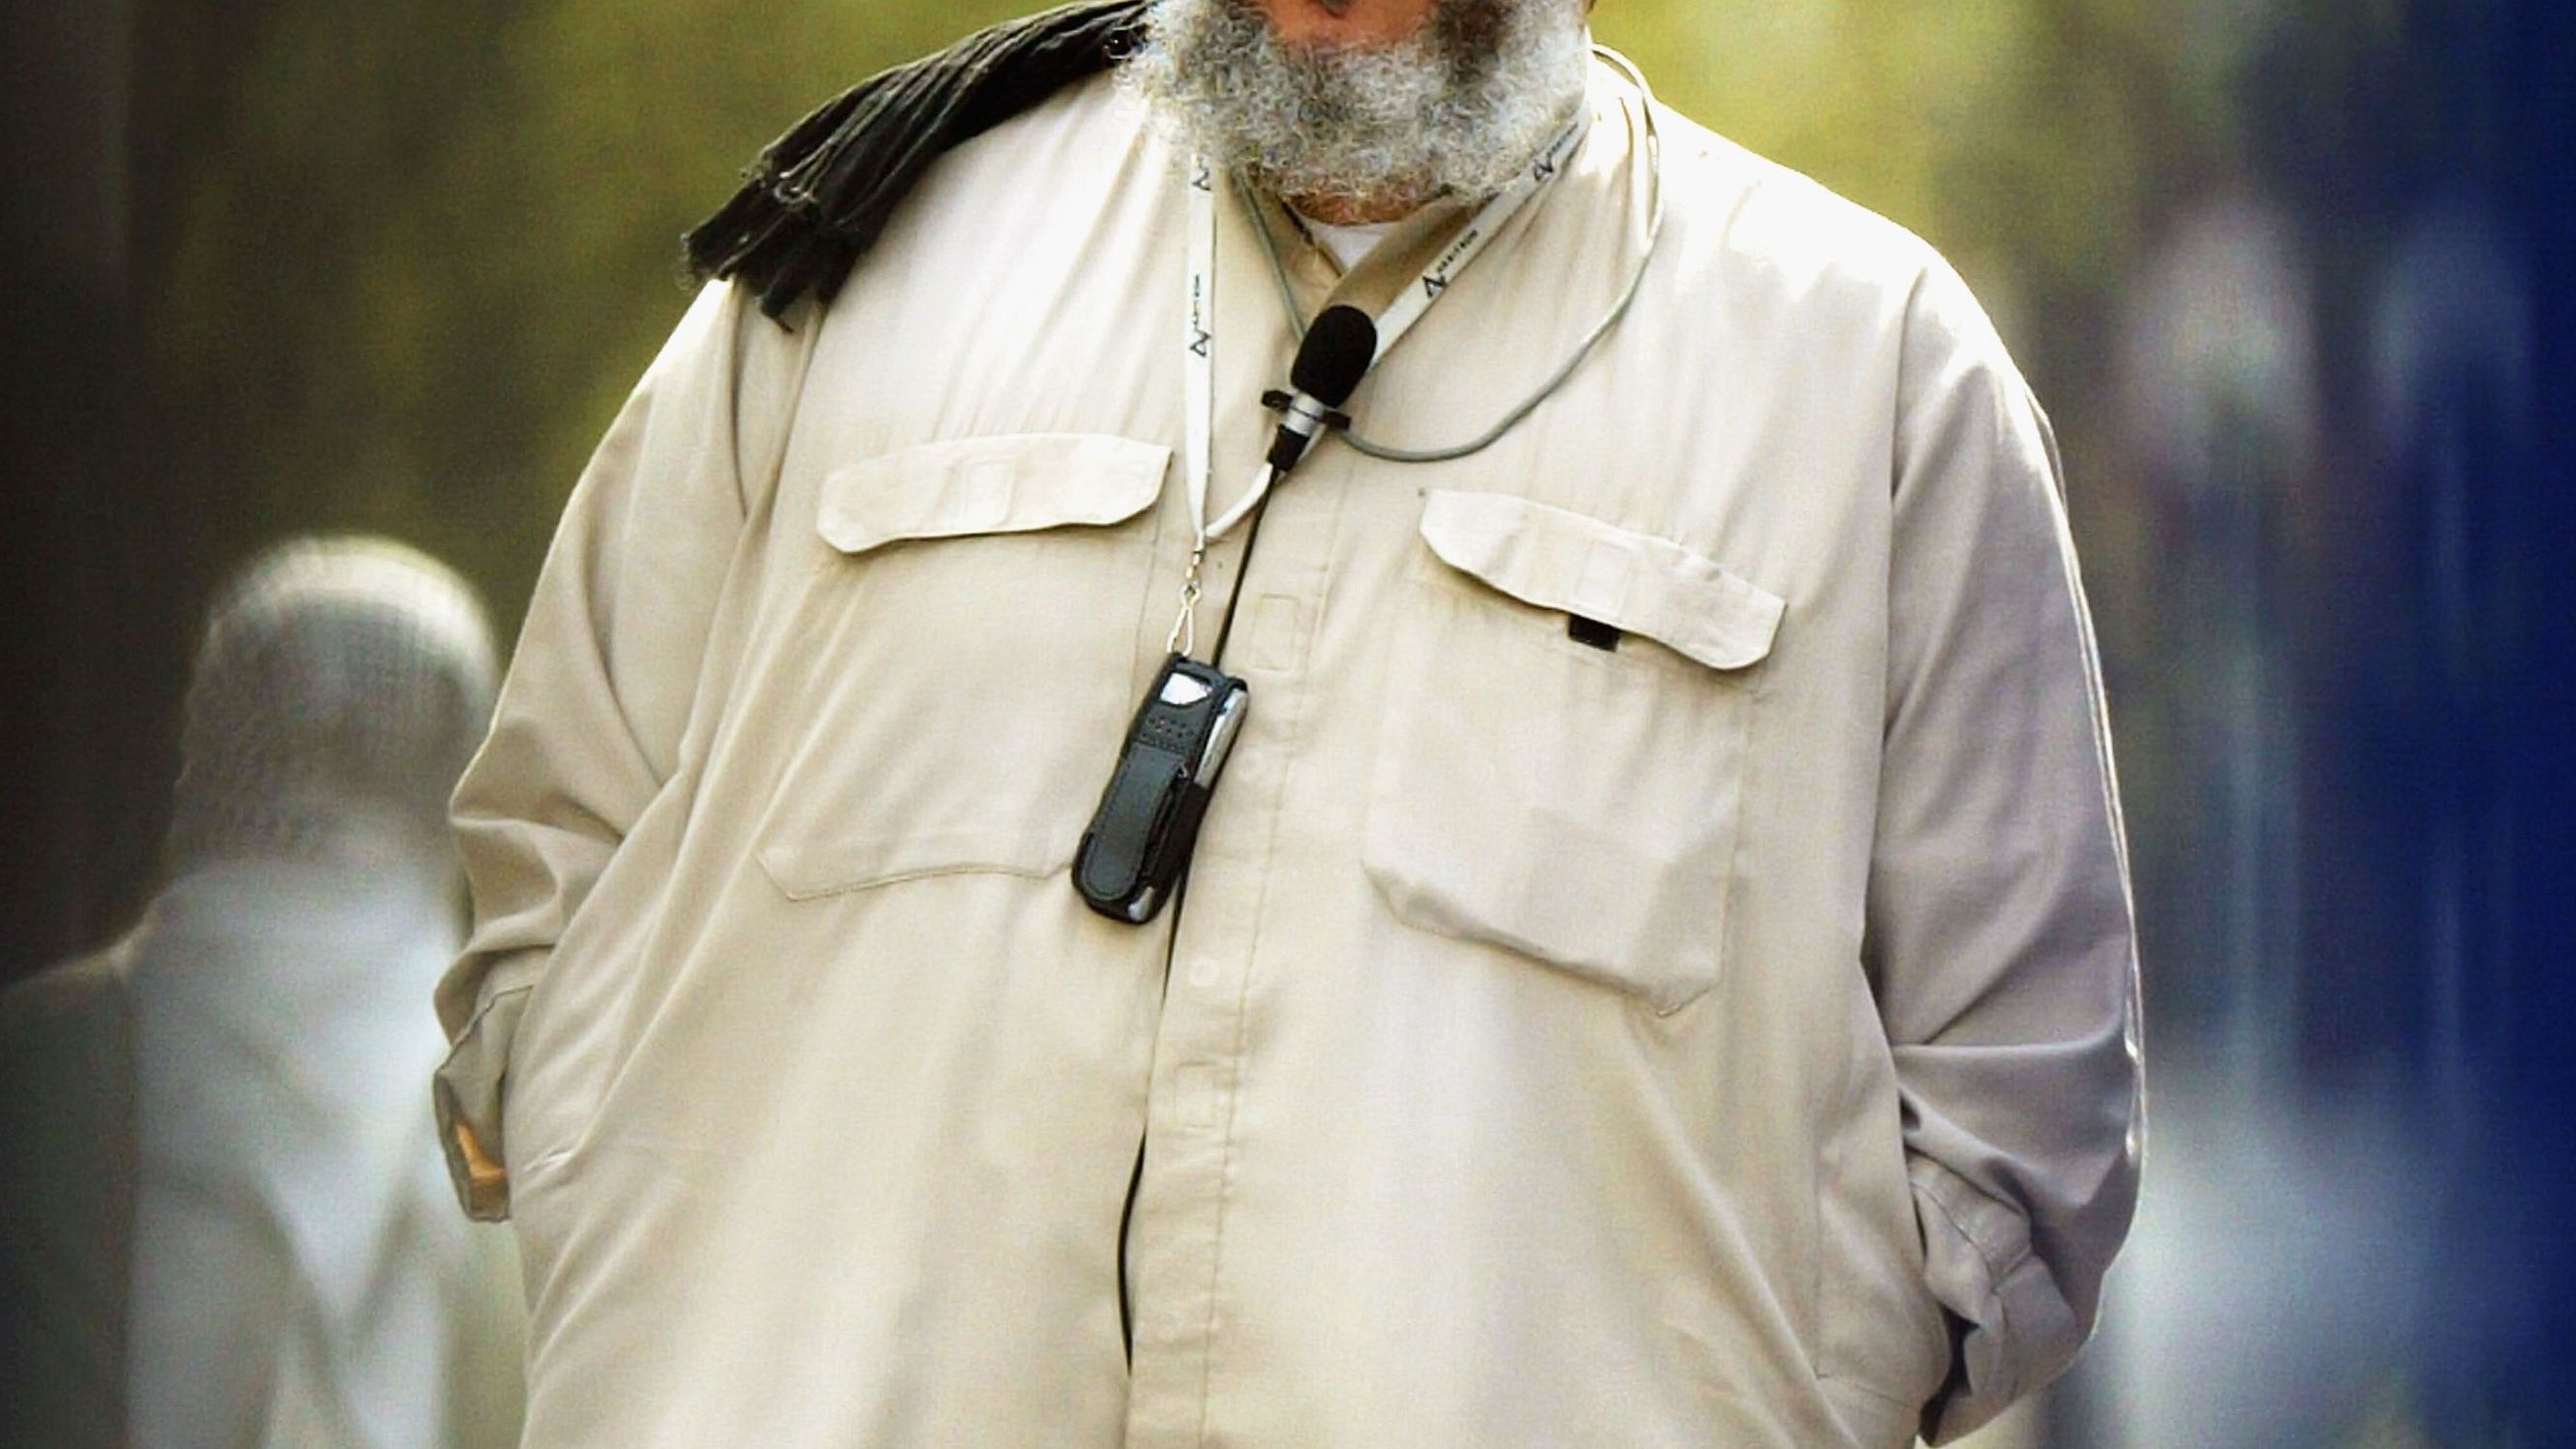 Radical Islamist cleric Abu Hamza al-Masri is sentenced to life in prison. 